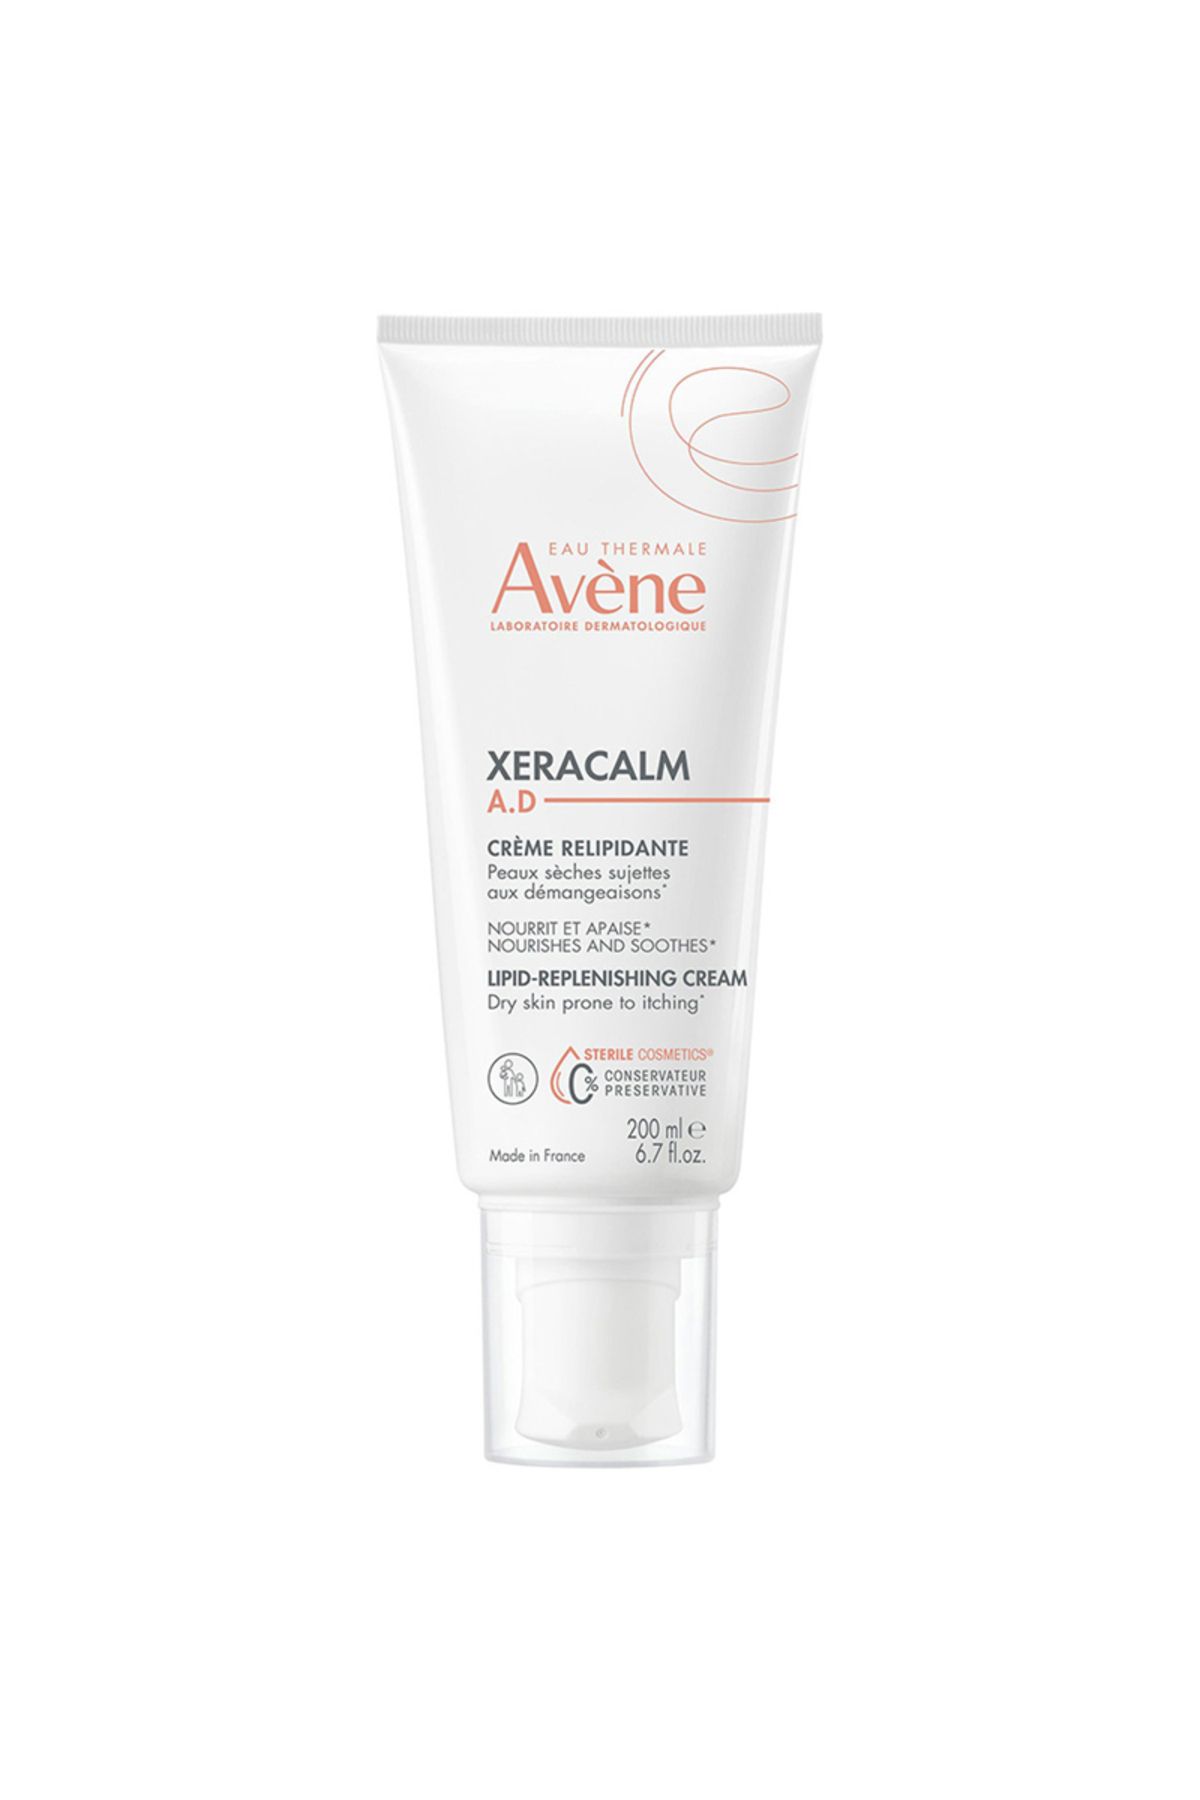 Avene Xeracalm A.D Lipid - Replenishing Cream - Atopik Cilt Bakım Kremi 200ml